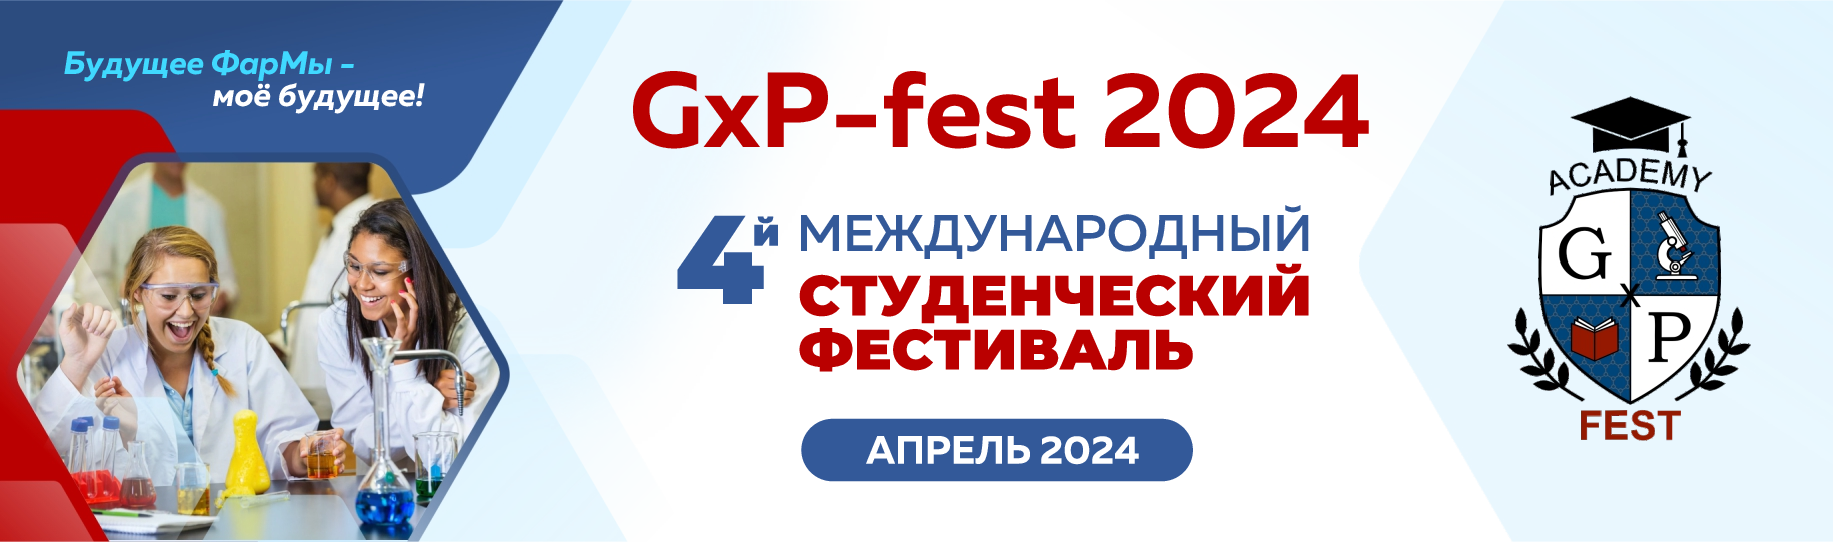 Участникам GxP-Феста 2024